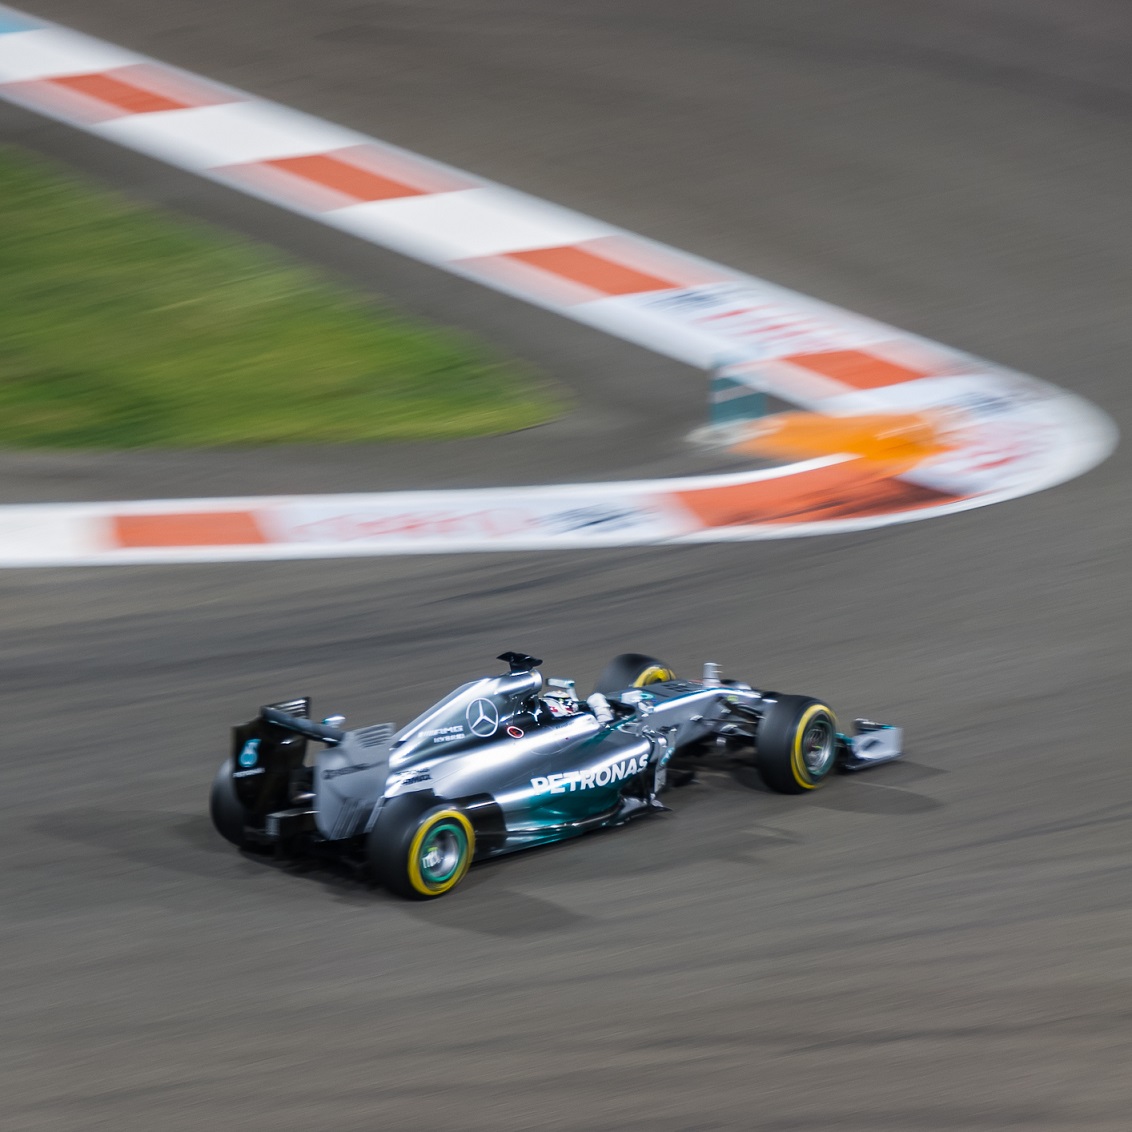 Photo Of The Week – The Car Of F1 World Champion Sun 23 Nov 2014 Lewis Hamilton